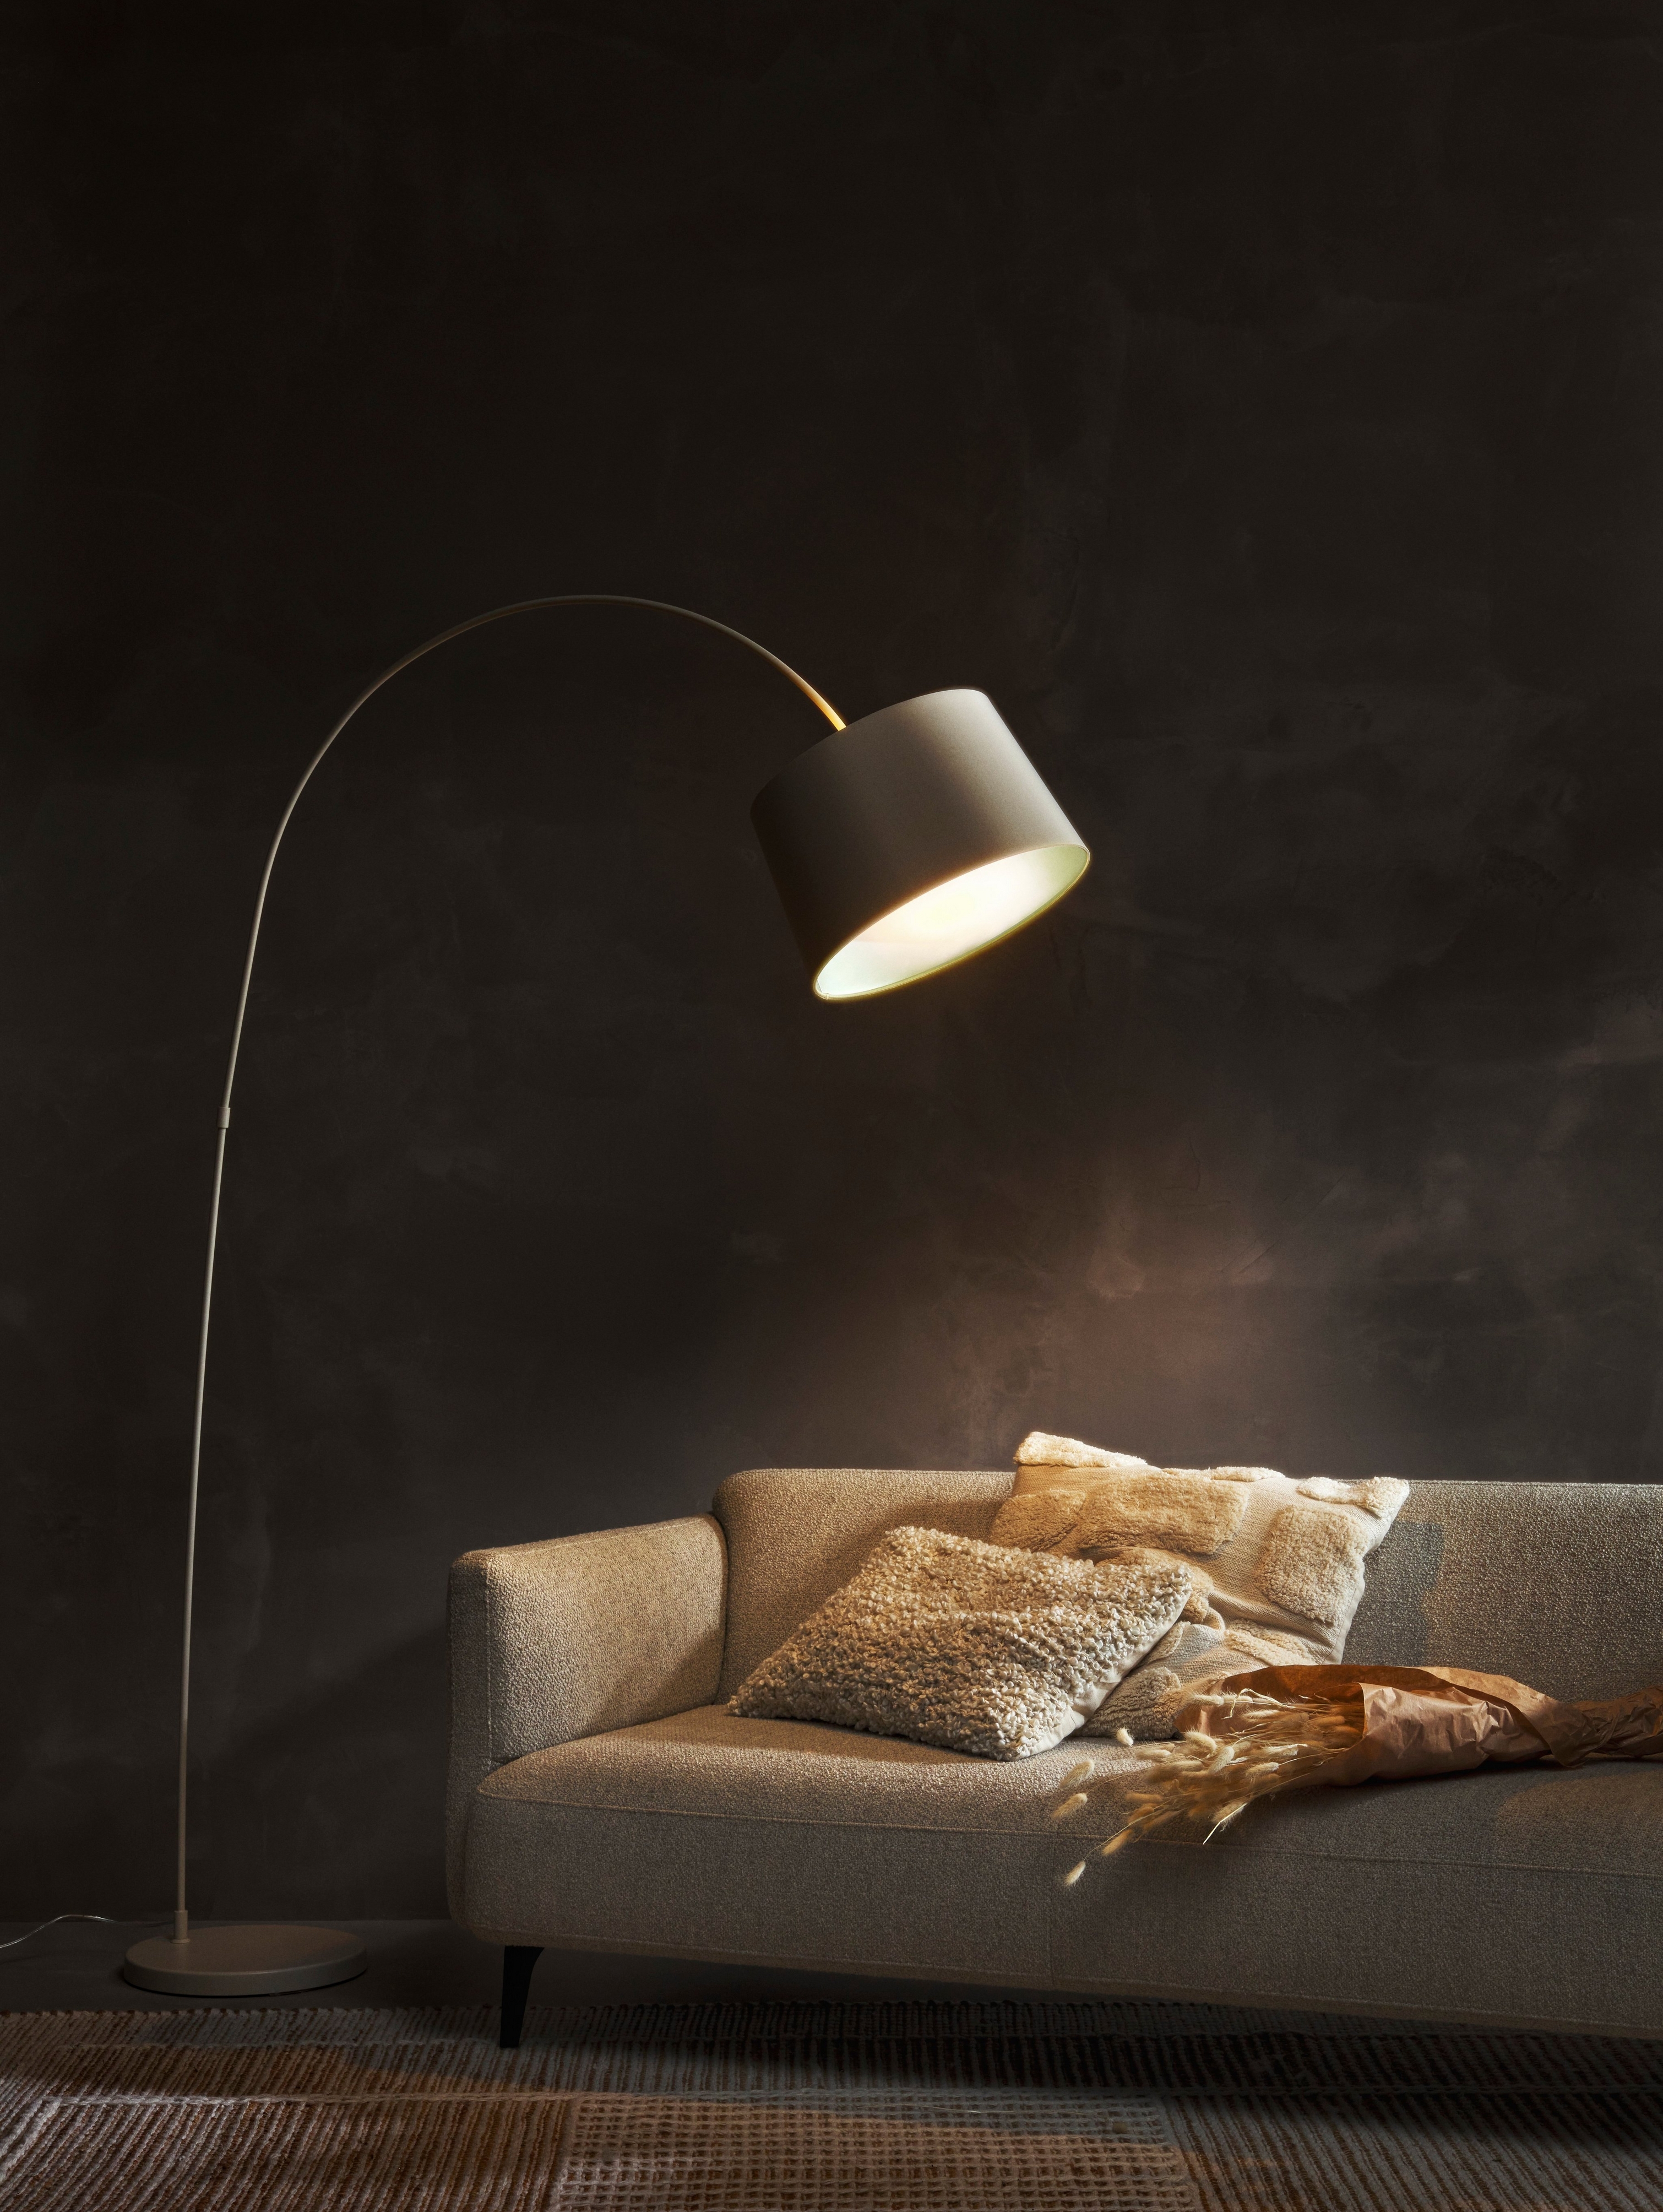 Kuta 落地燈照亮灰色 Modena 沙發和靠枕，背景為深色牆面。